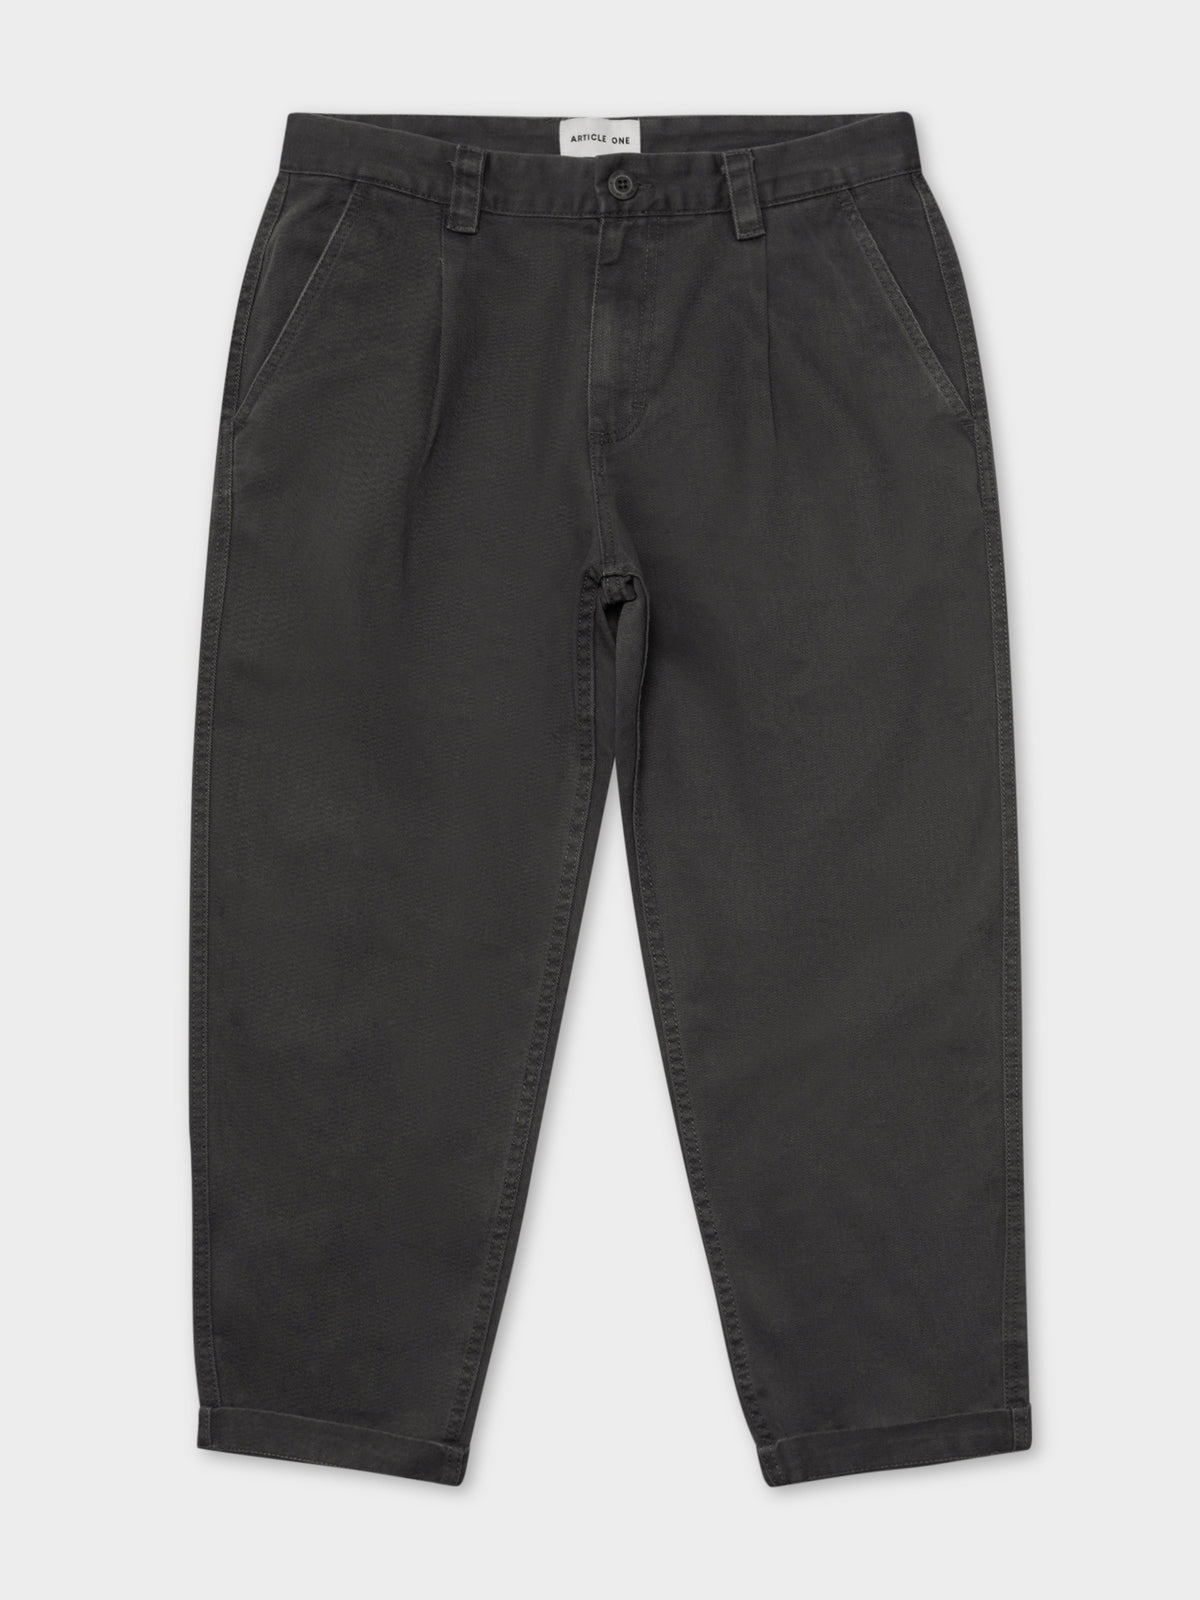 Beau Slim Pants in Coal Grey